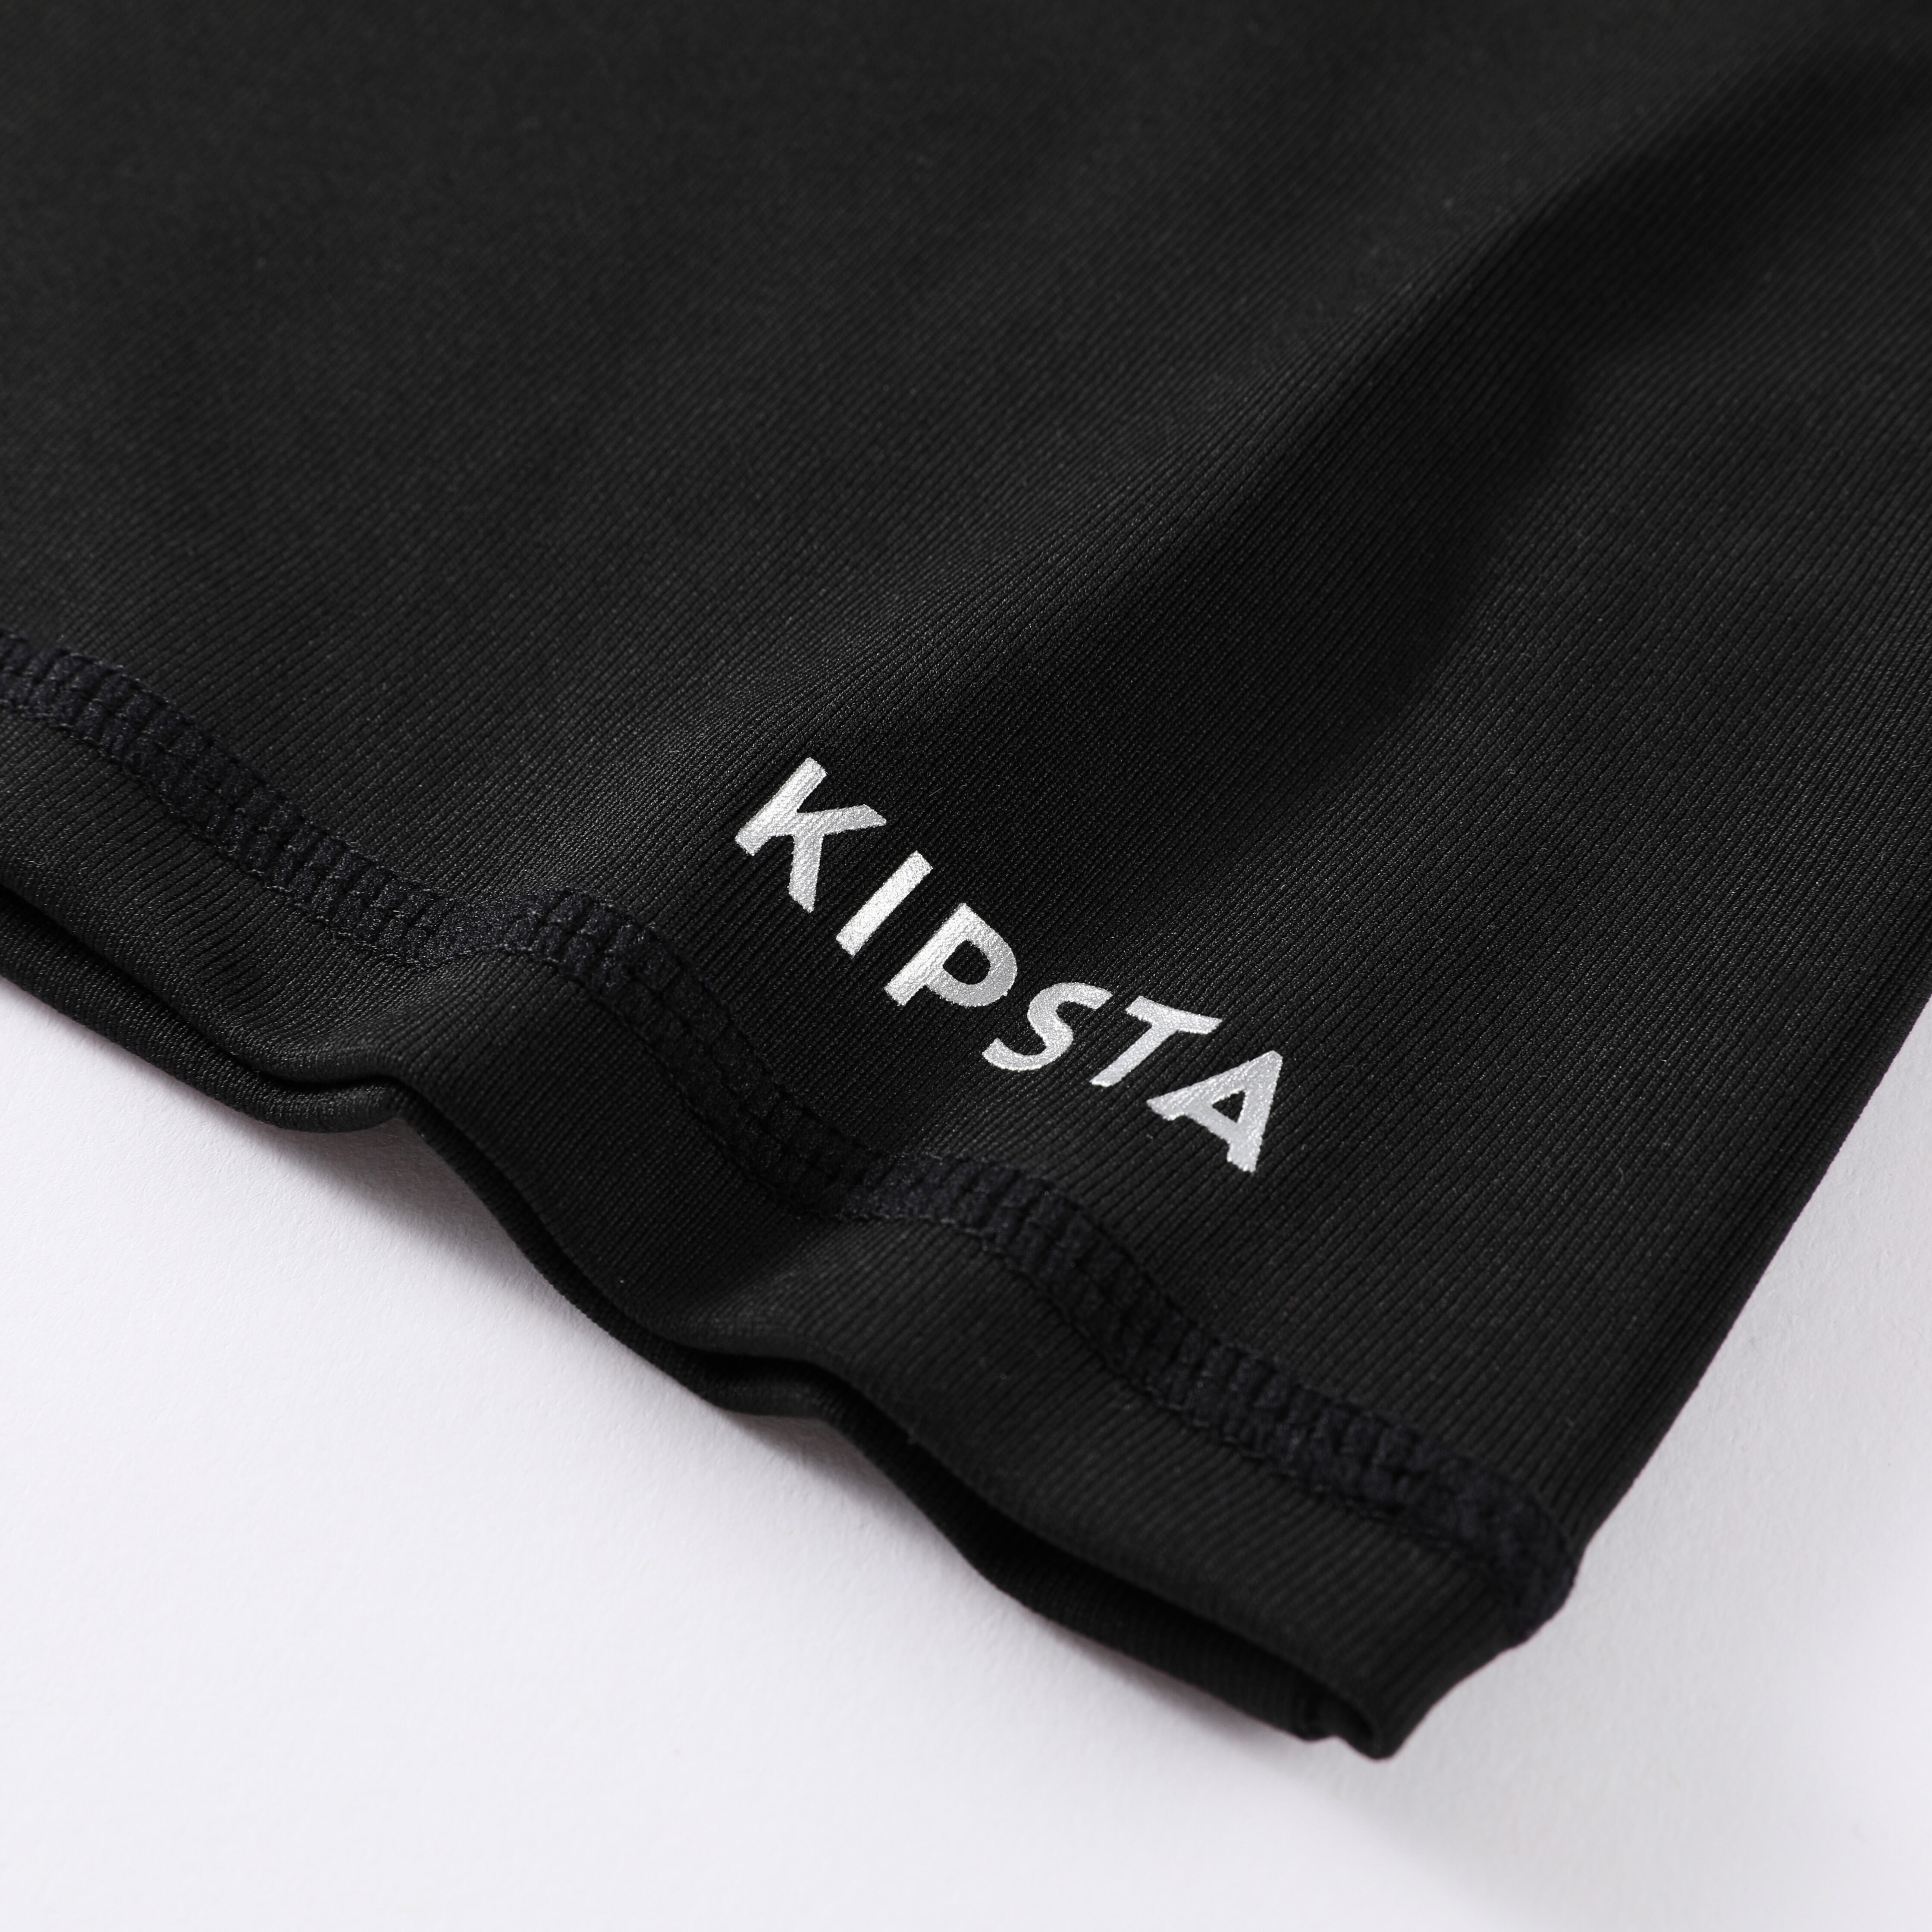 Kids' Long-Sleeved Thermal Base Layer Top Keepcomfort 100 - Black - KIPSTA